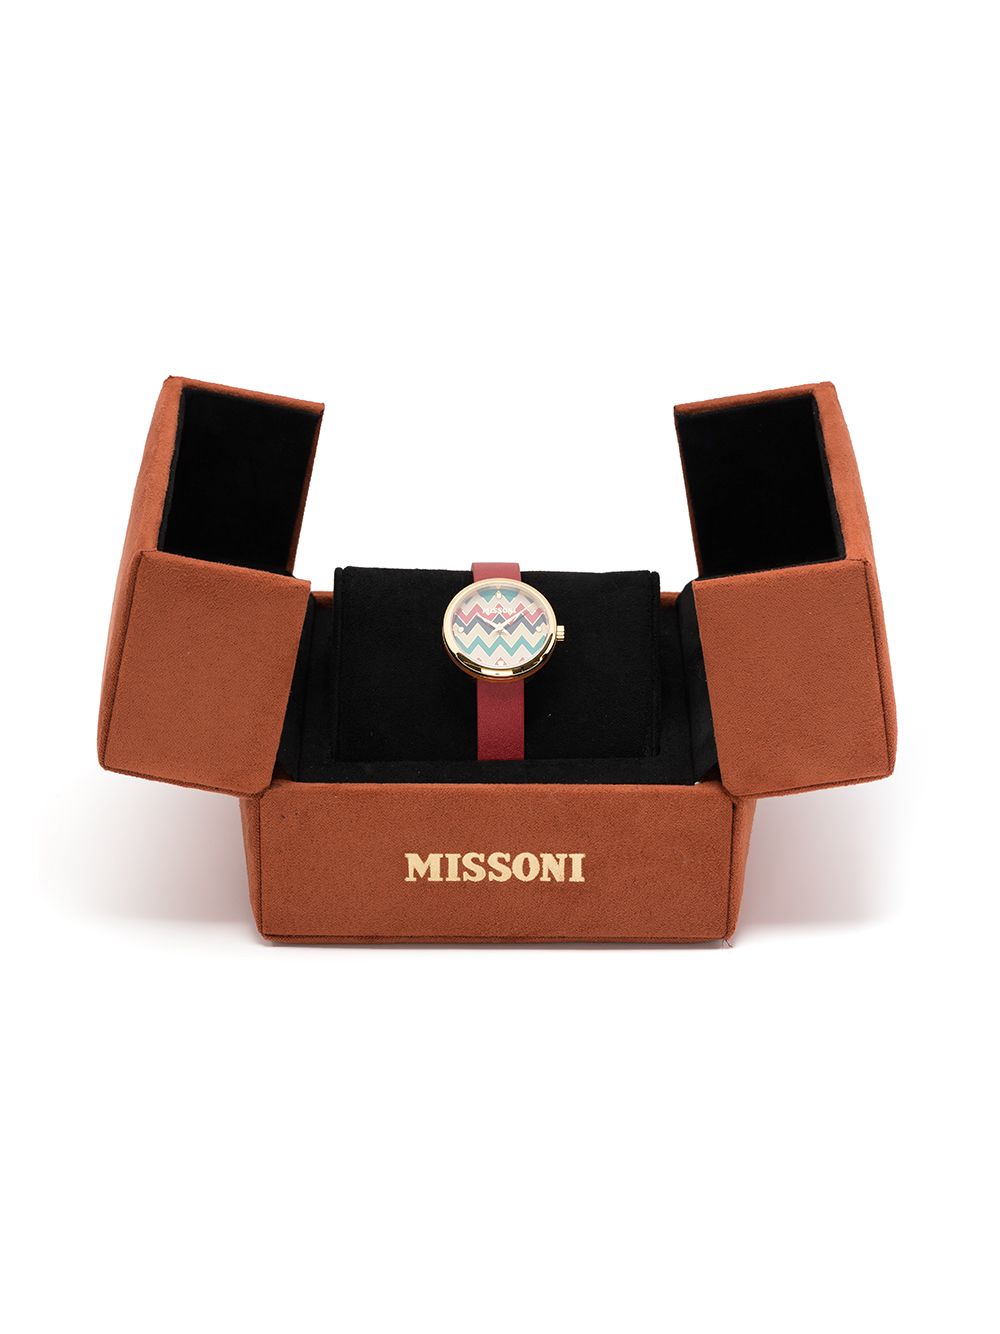 фото Missoni наручные часы m1 chevron 29 мм